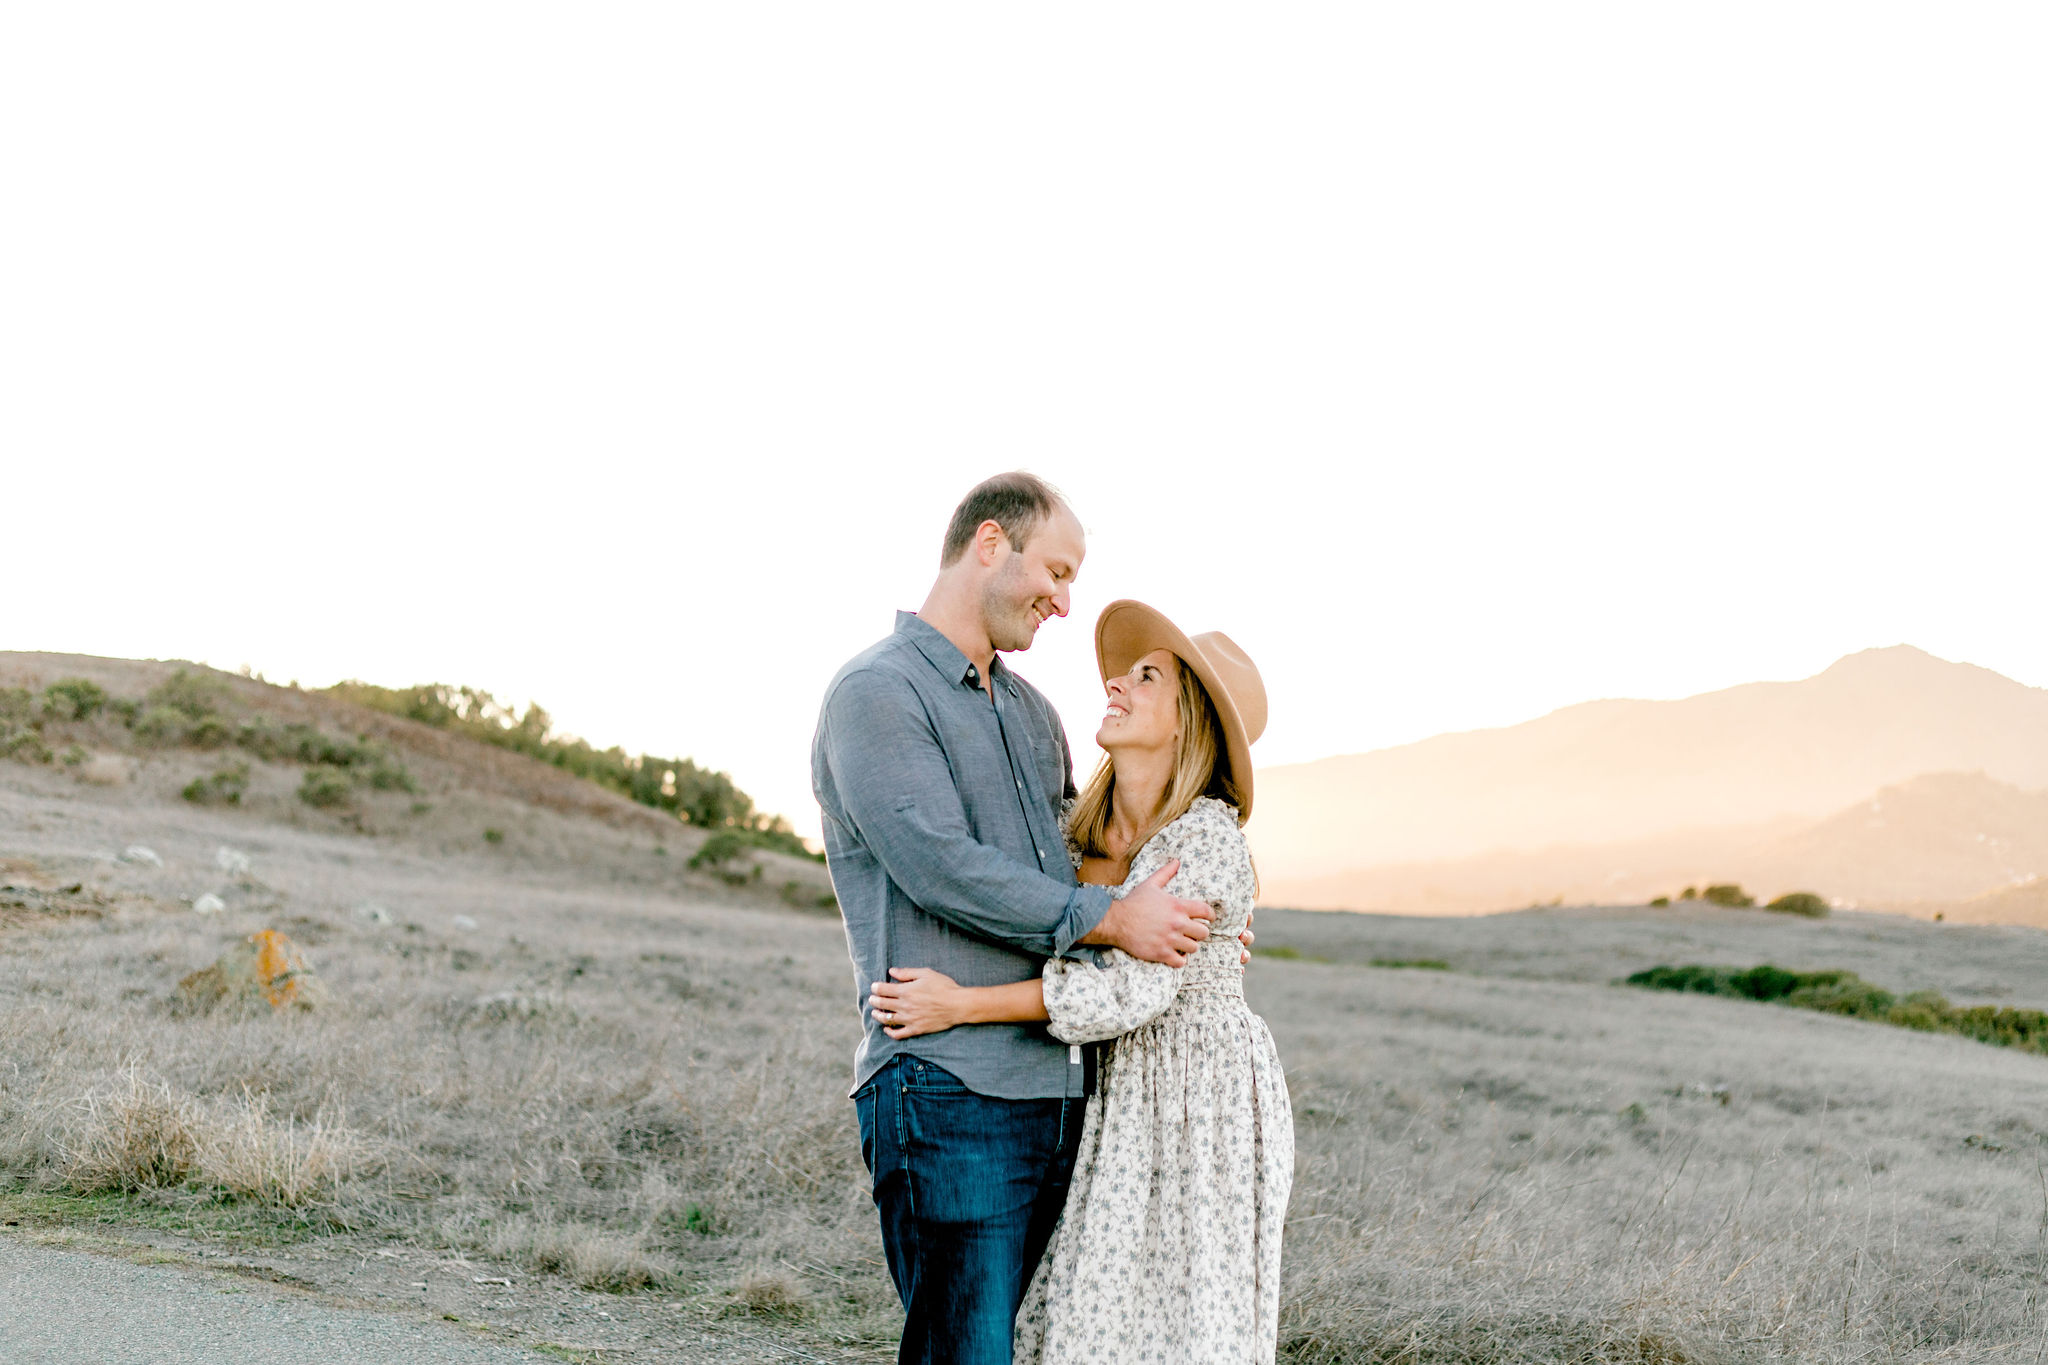 Bay Area wedding photographer captures man and woman hugging during engagement photos